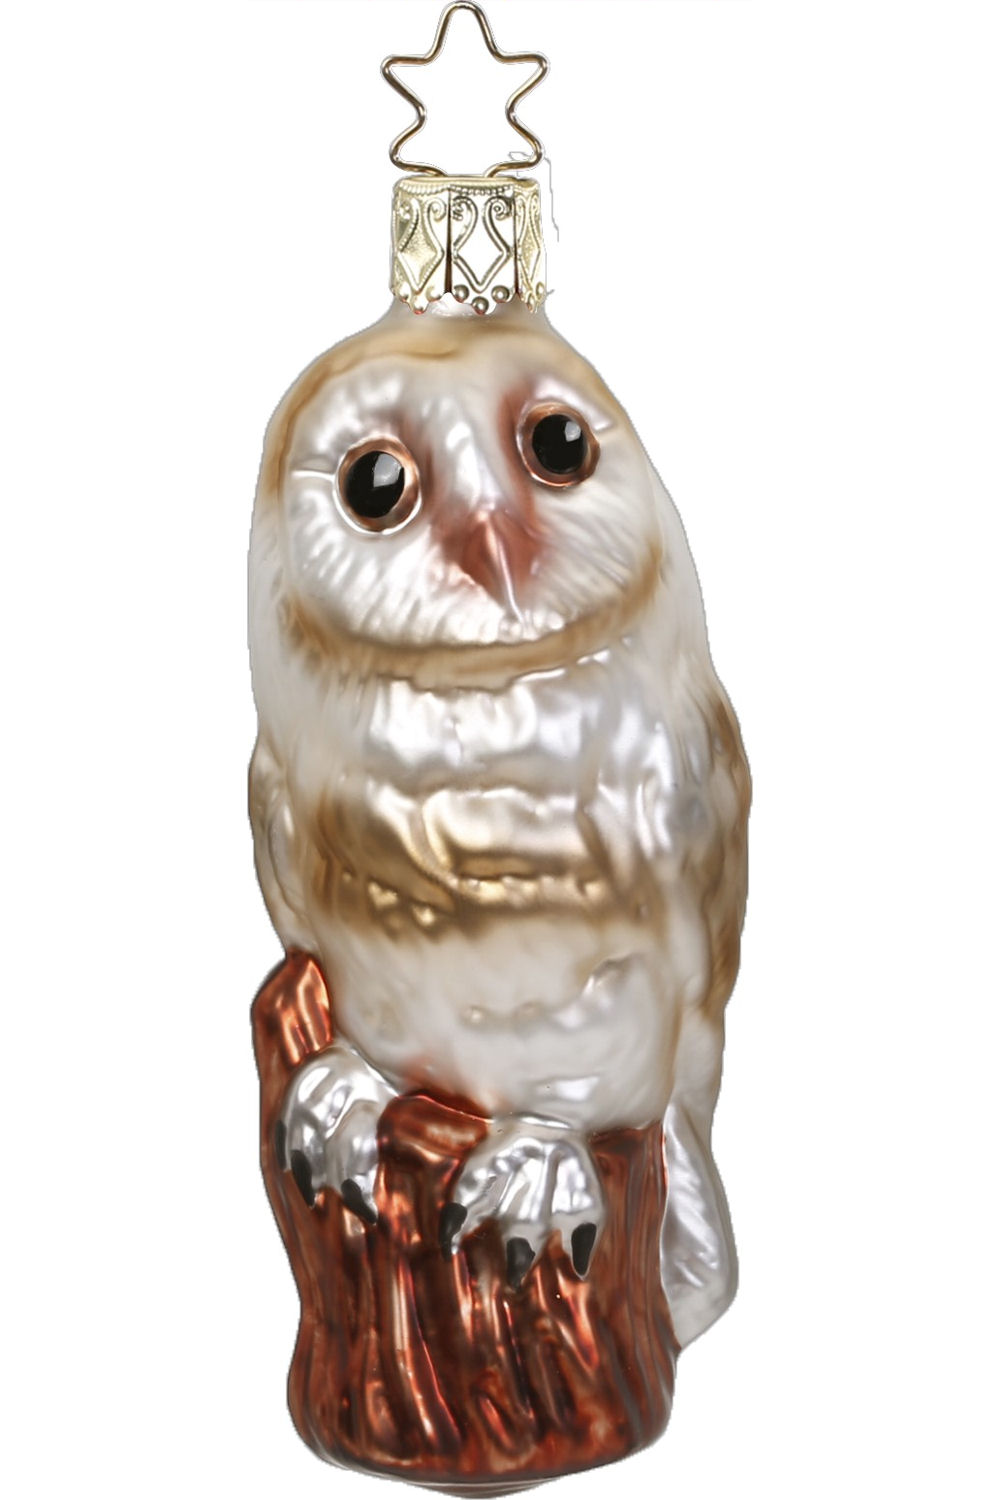 Inge Glas Owl Woodland Owl 1-471-01 German Glass Christmas Ornament 